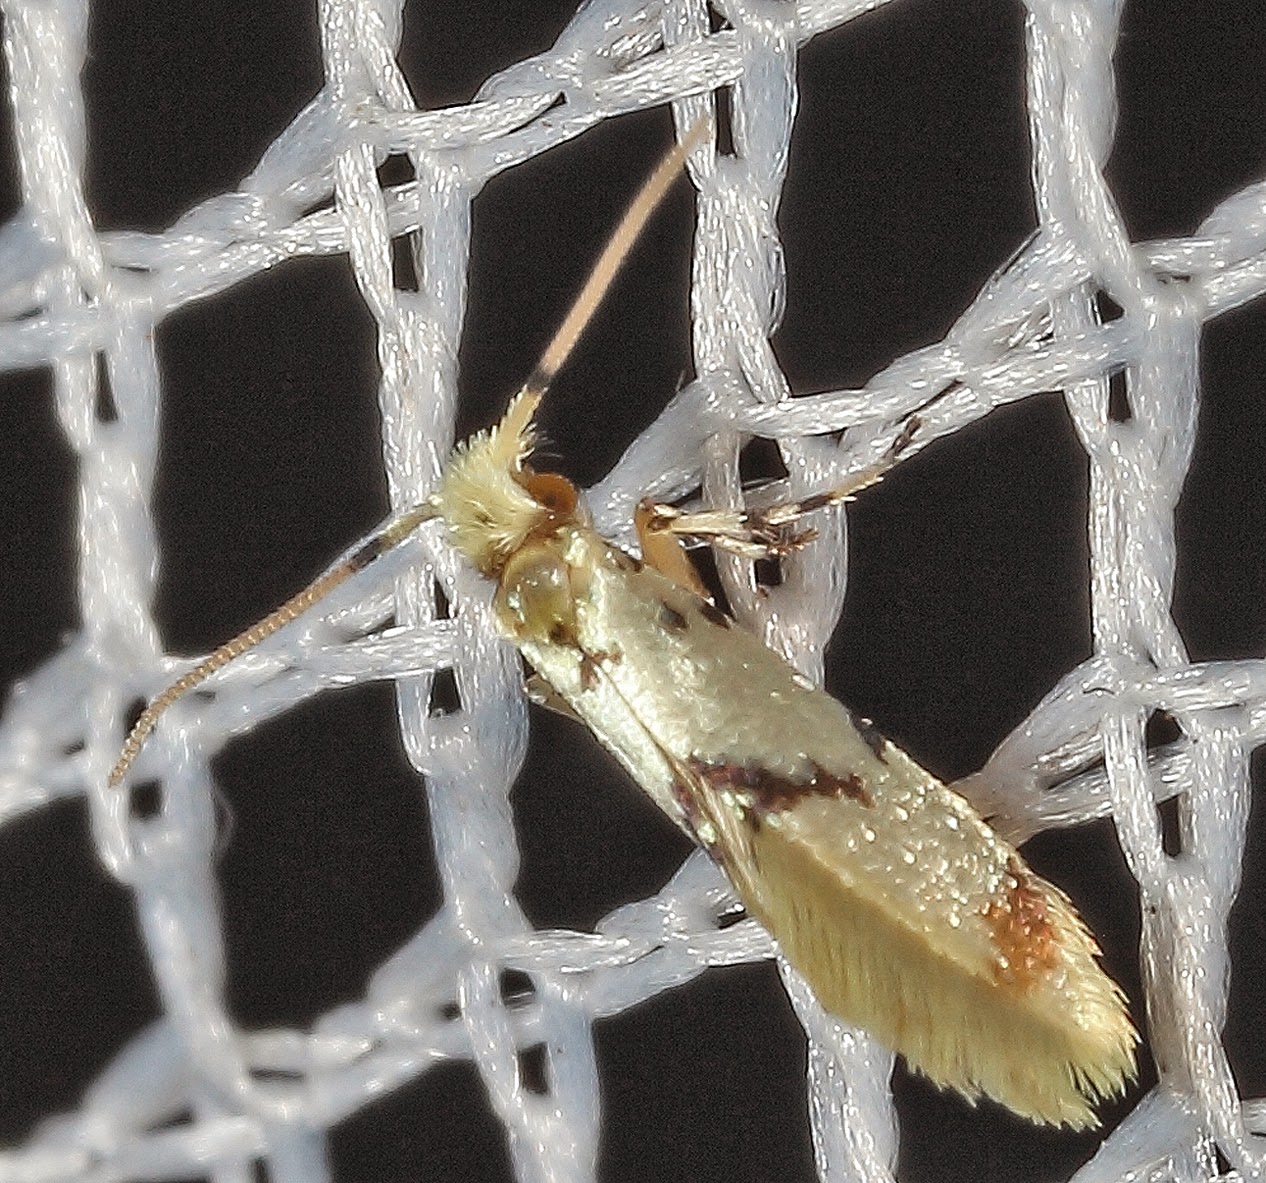 BunyipCo: A Most Primitive Moth